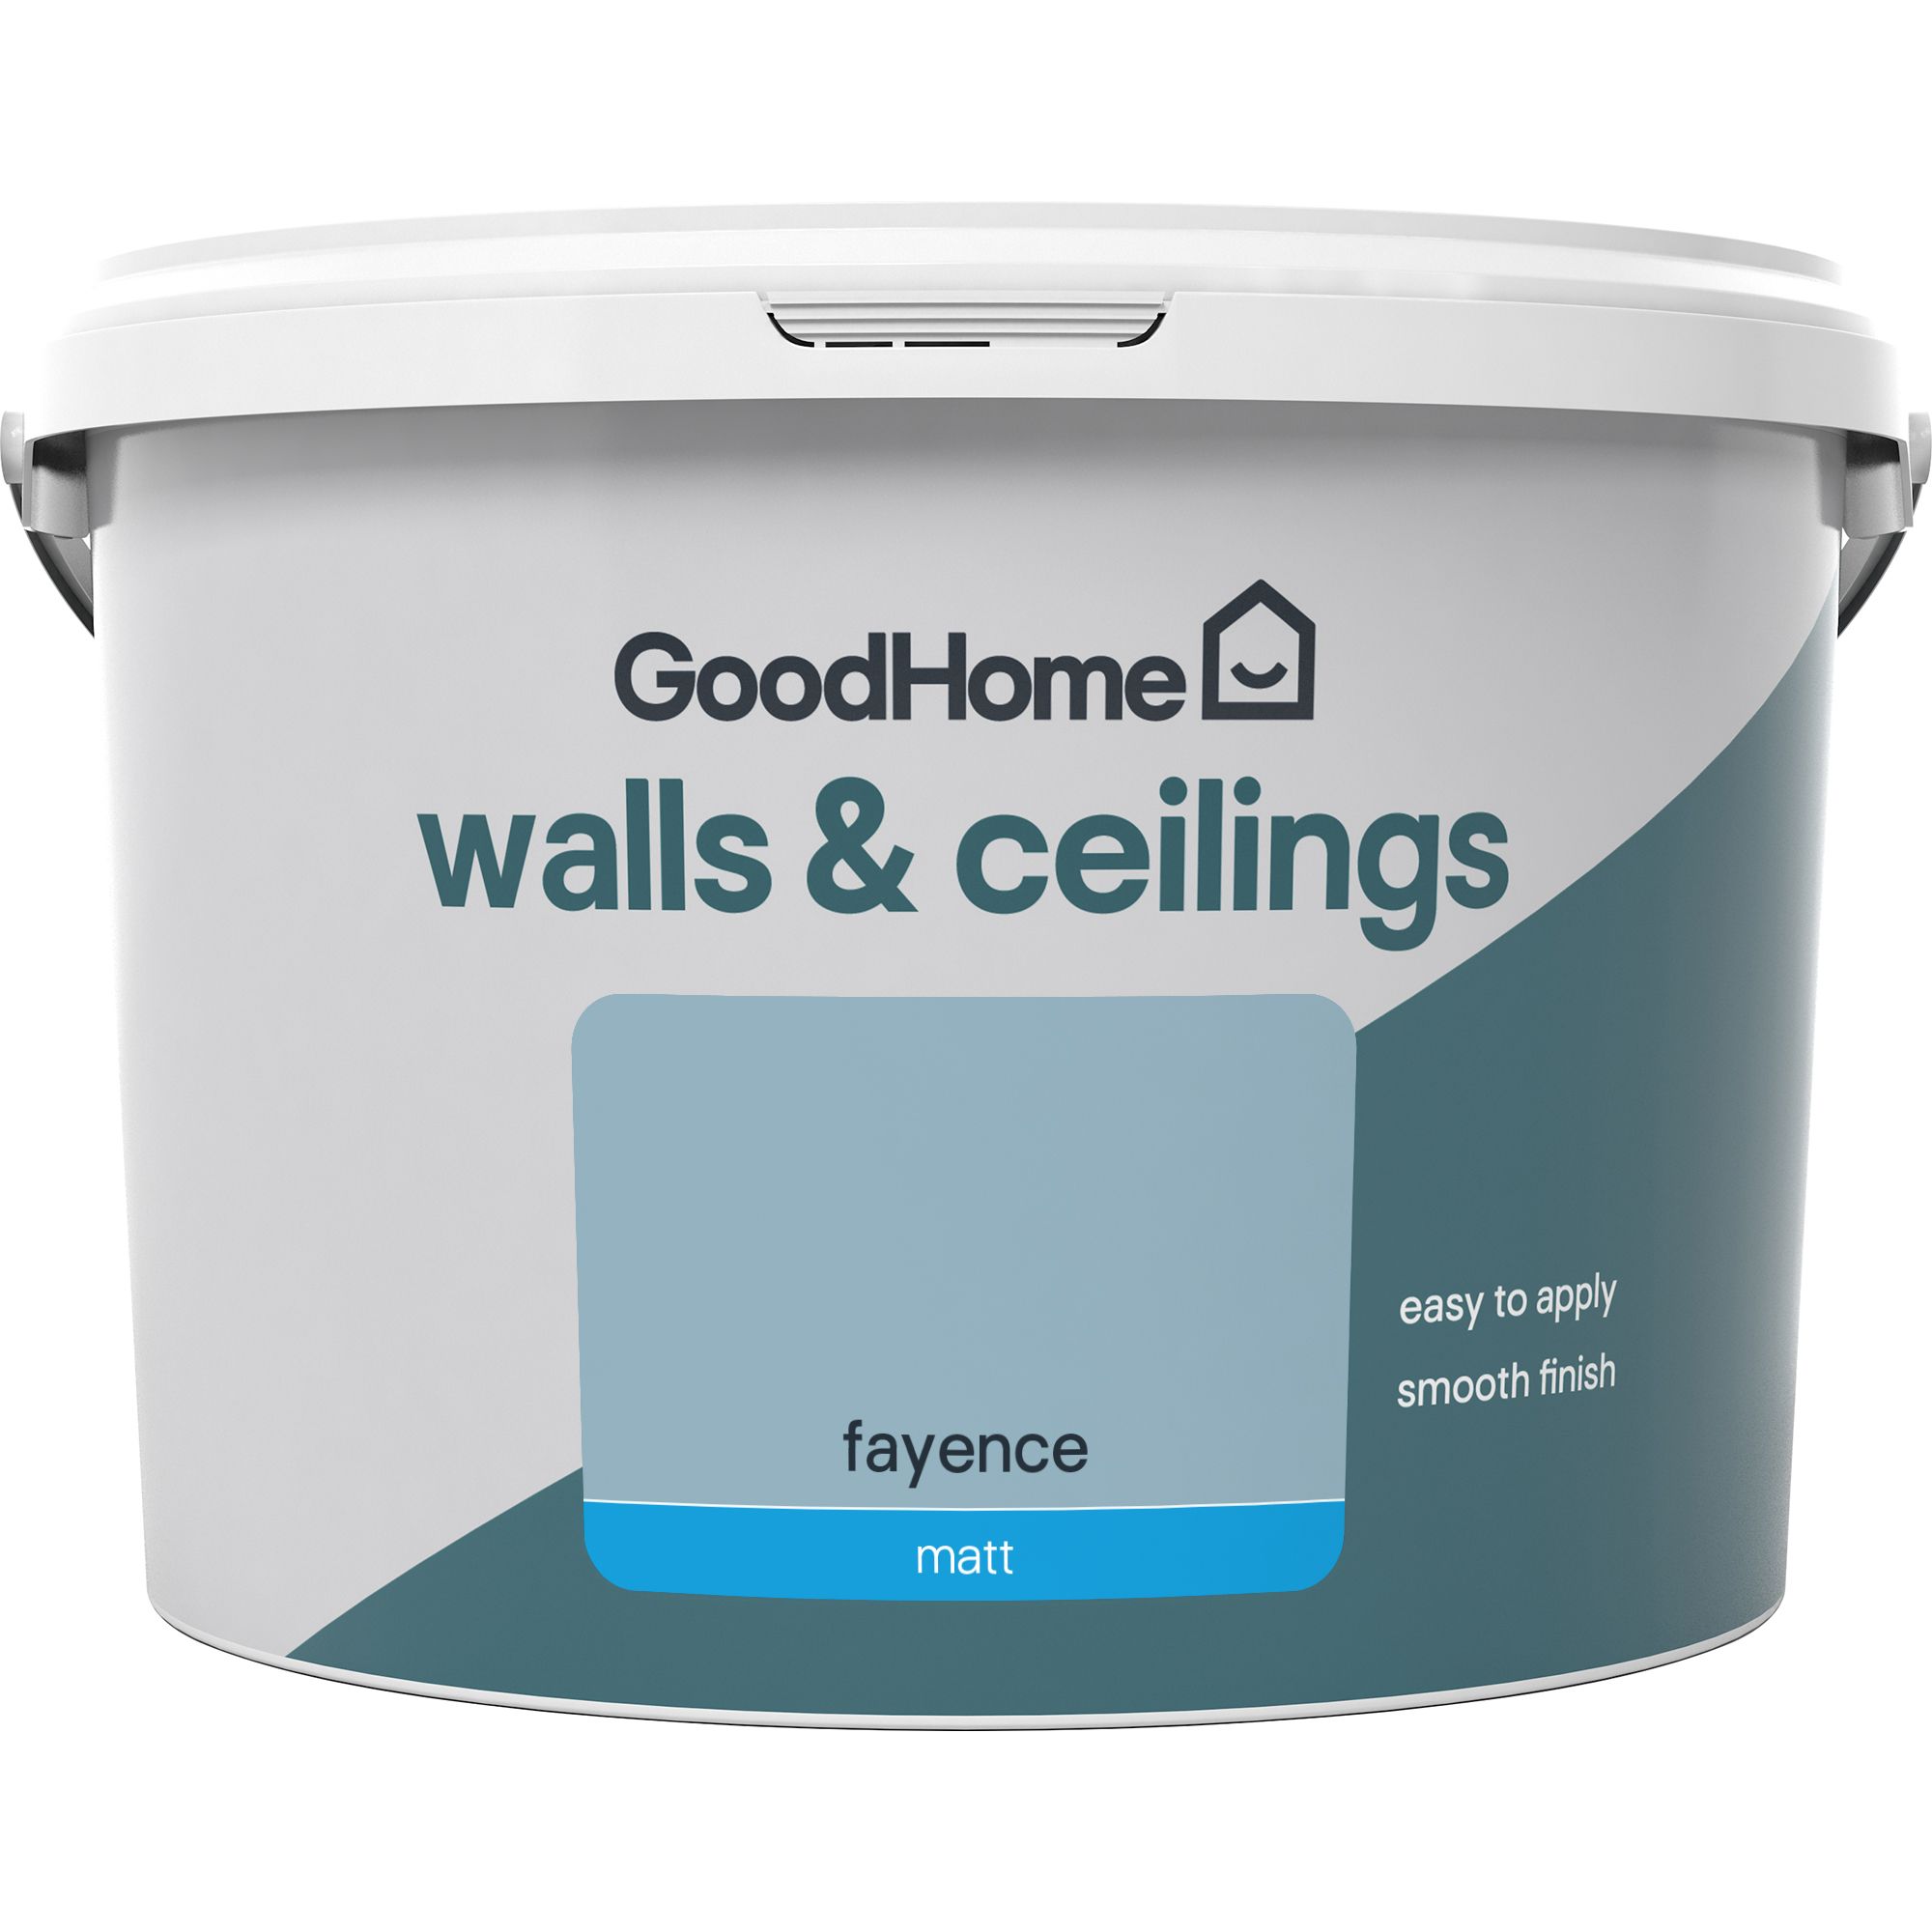 GoodHome Walls & ceilings Fayence Matt Emulsion paint, 2.5L